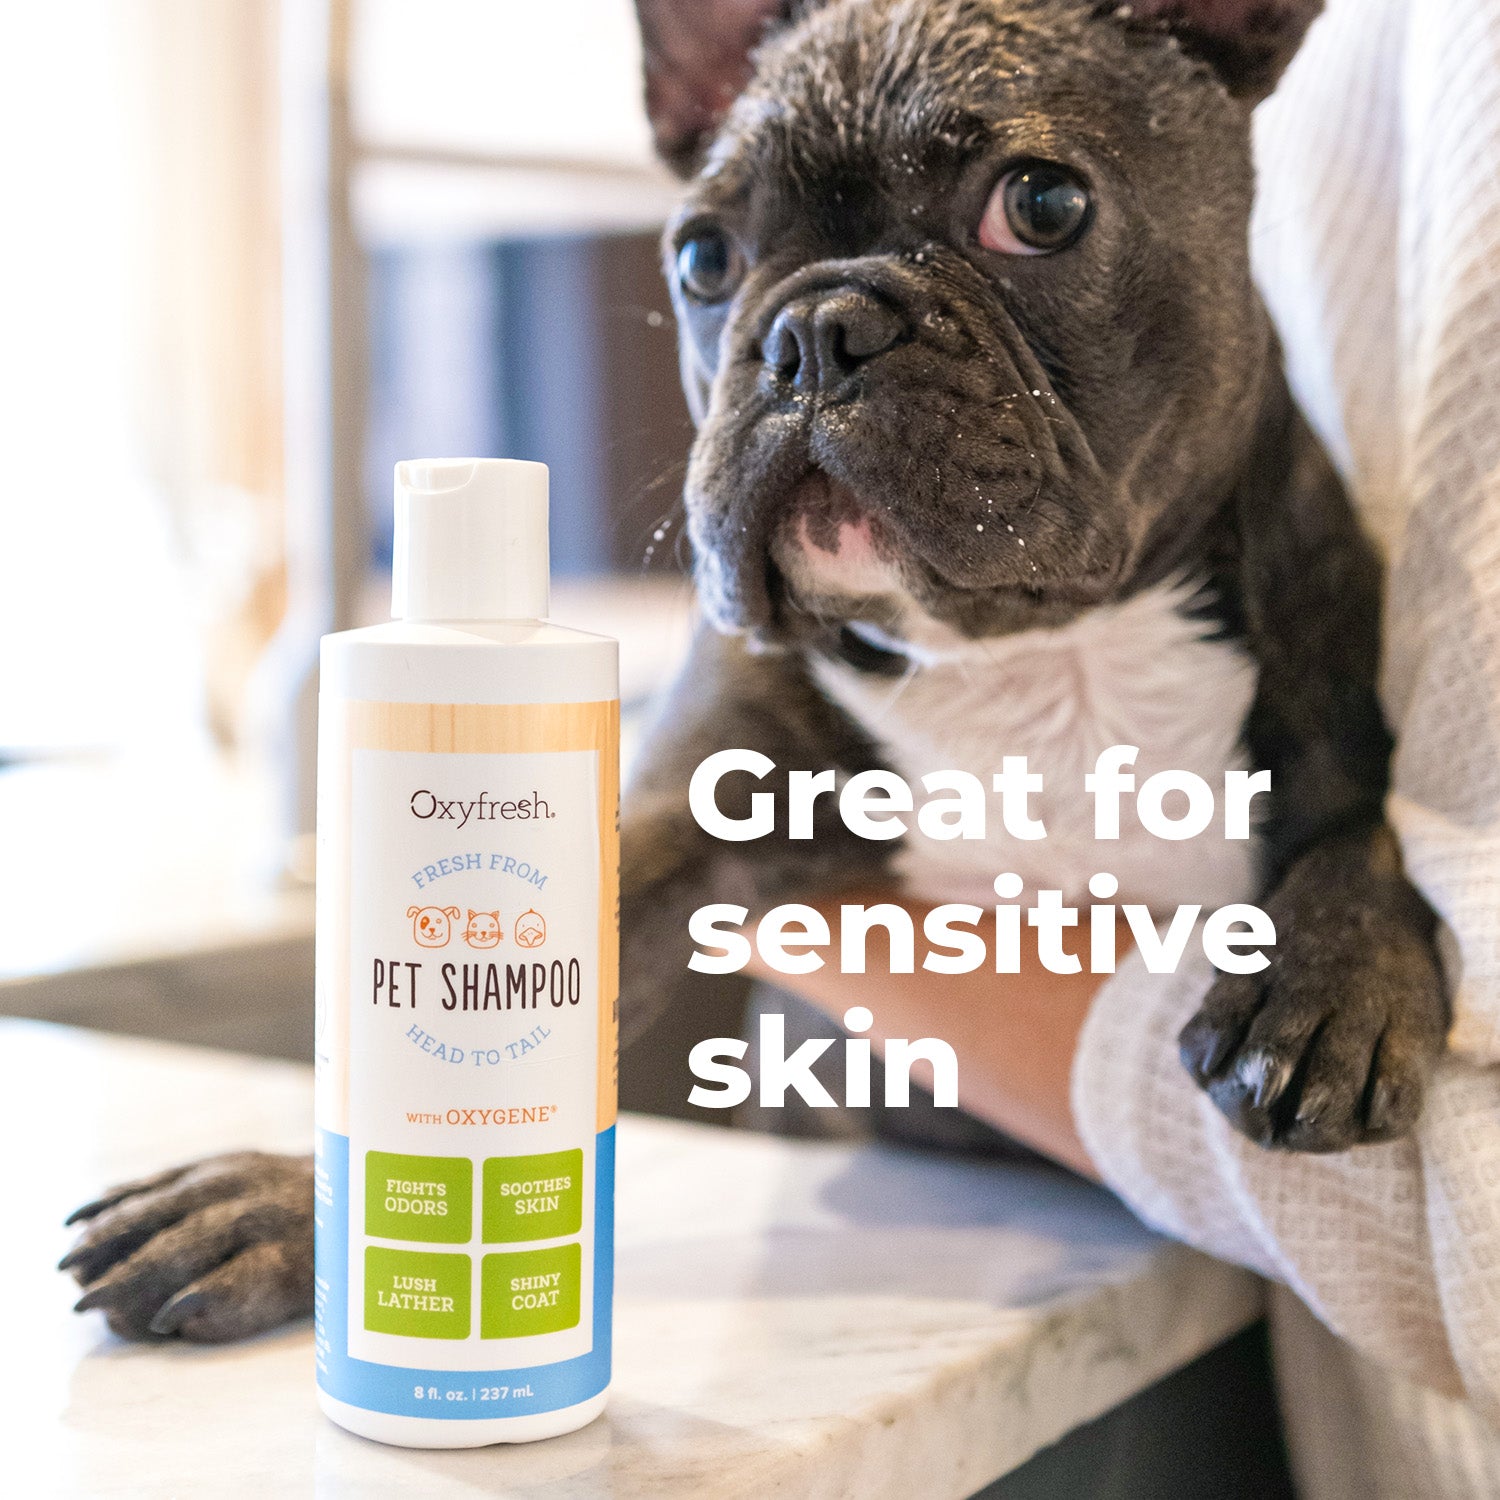 oxyfresh-pet-shampoo-is-great-for-sensitive-skin